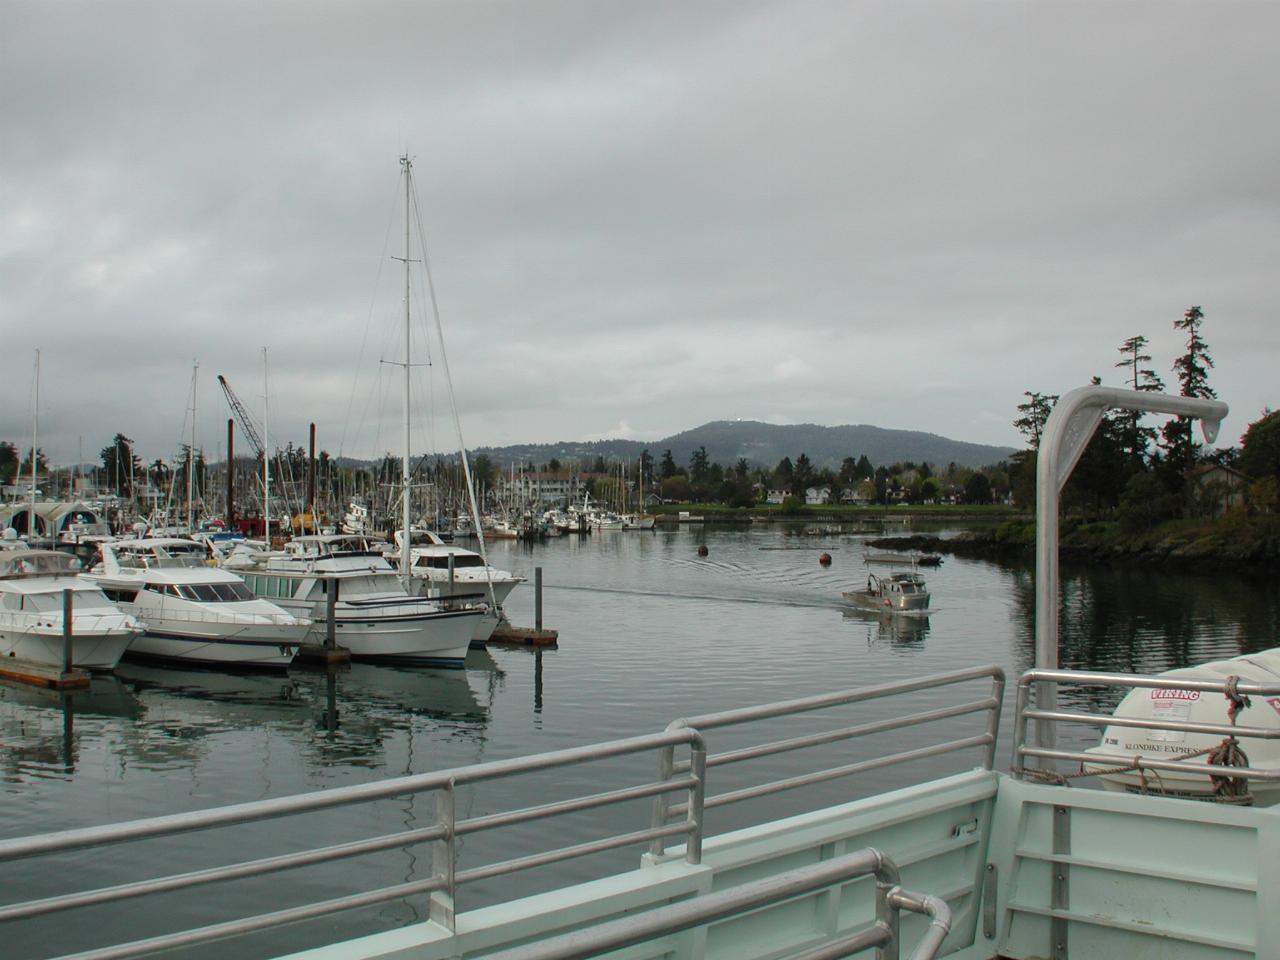 Views around Sidney BC's marina as we depart